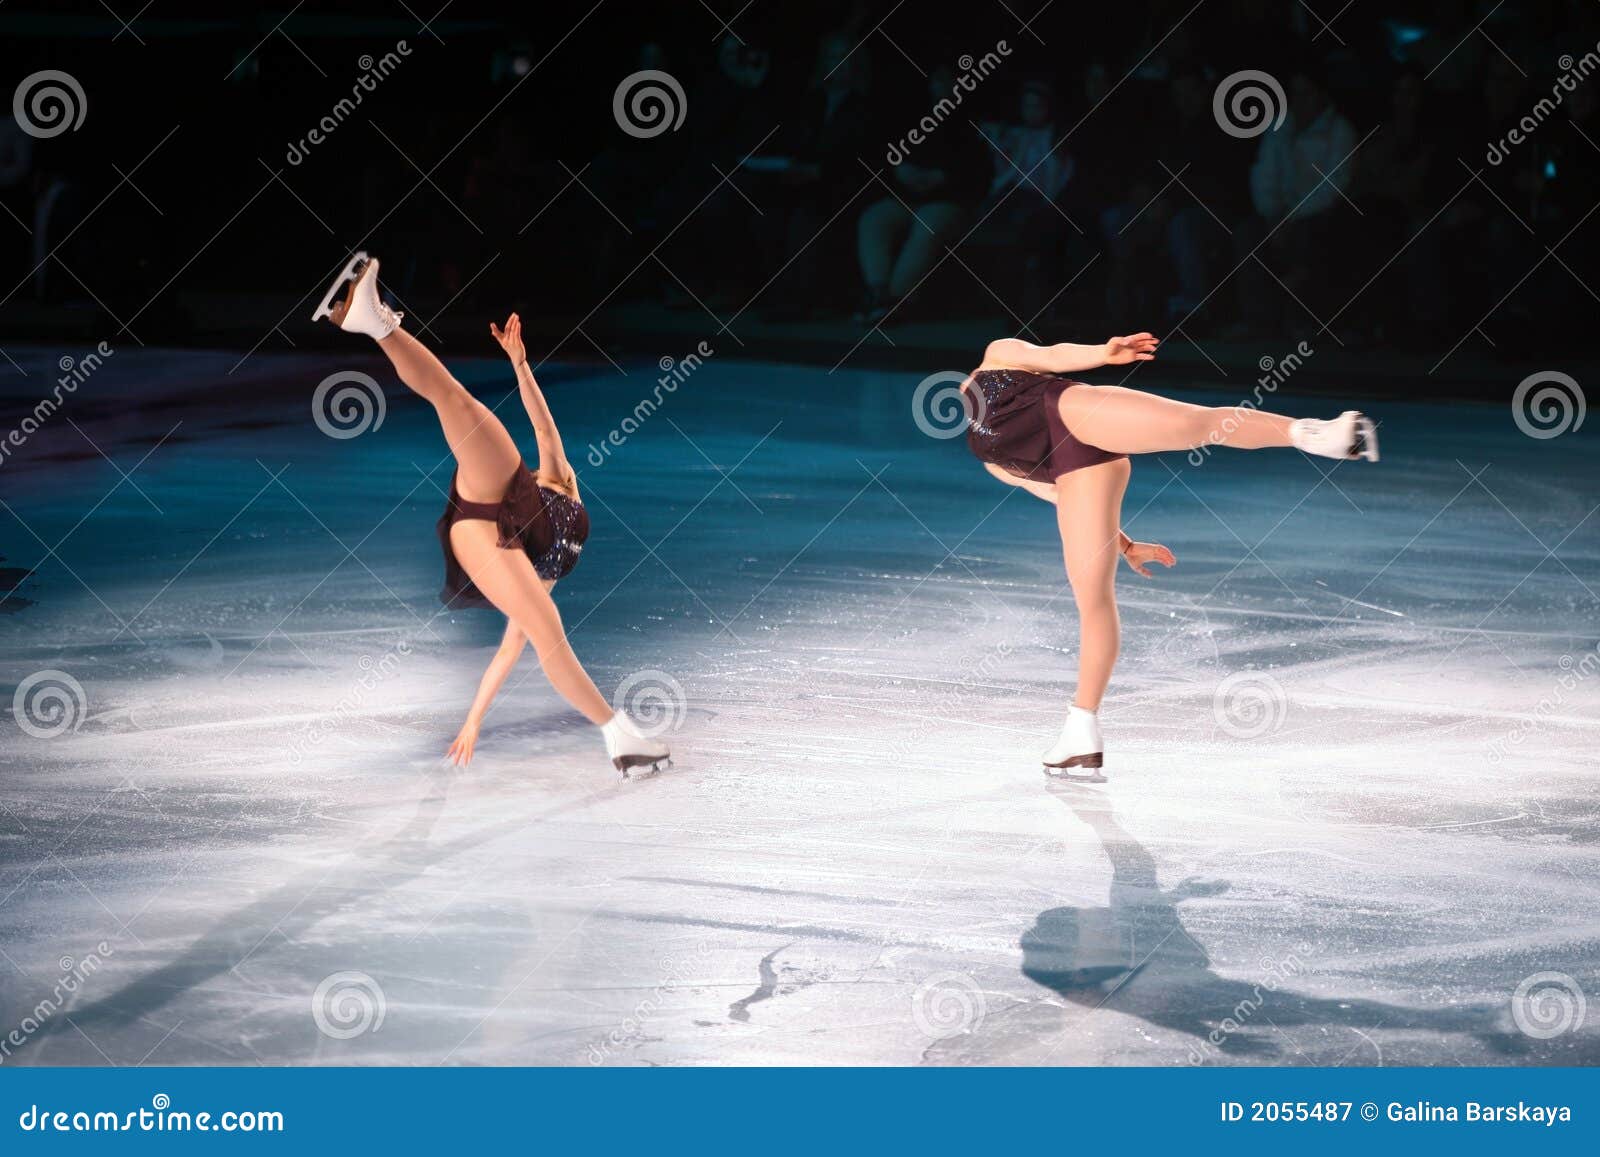 figure skaters